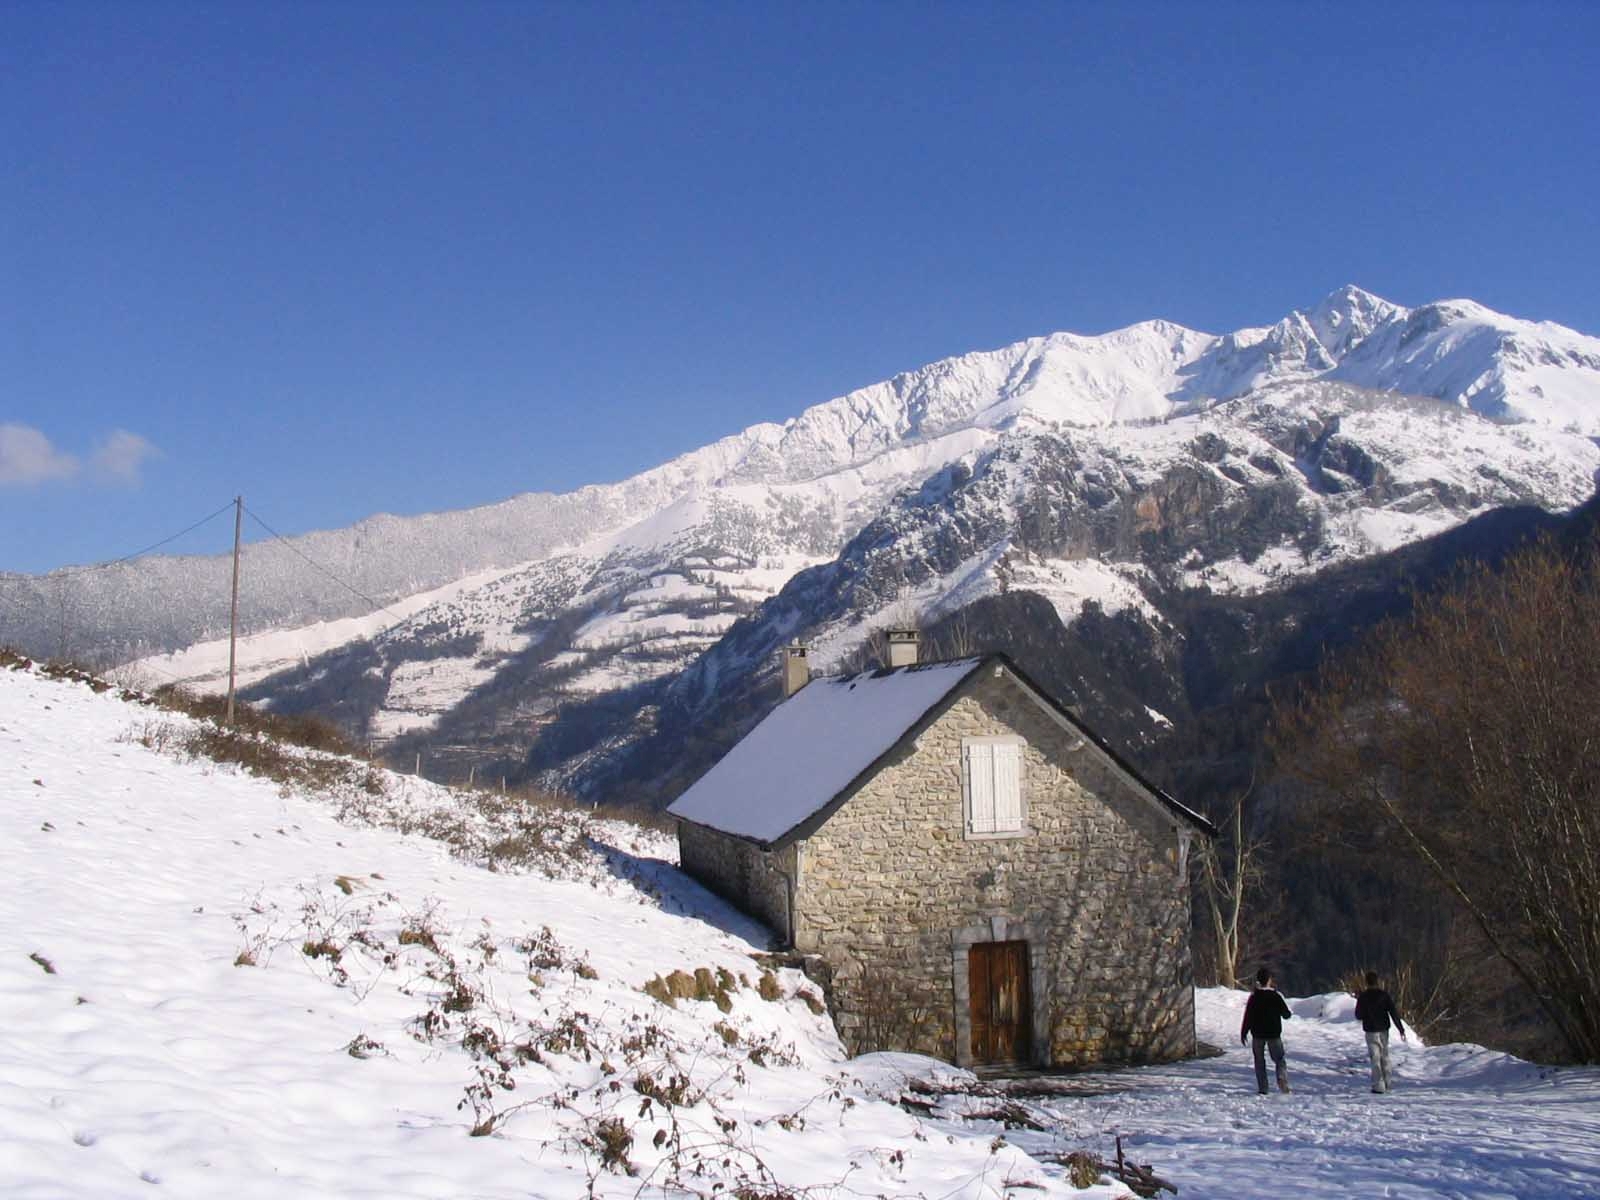 Gite-Apiou-sous-la-neige 